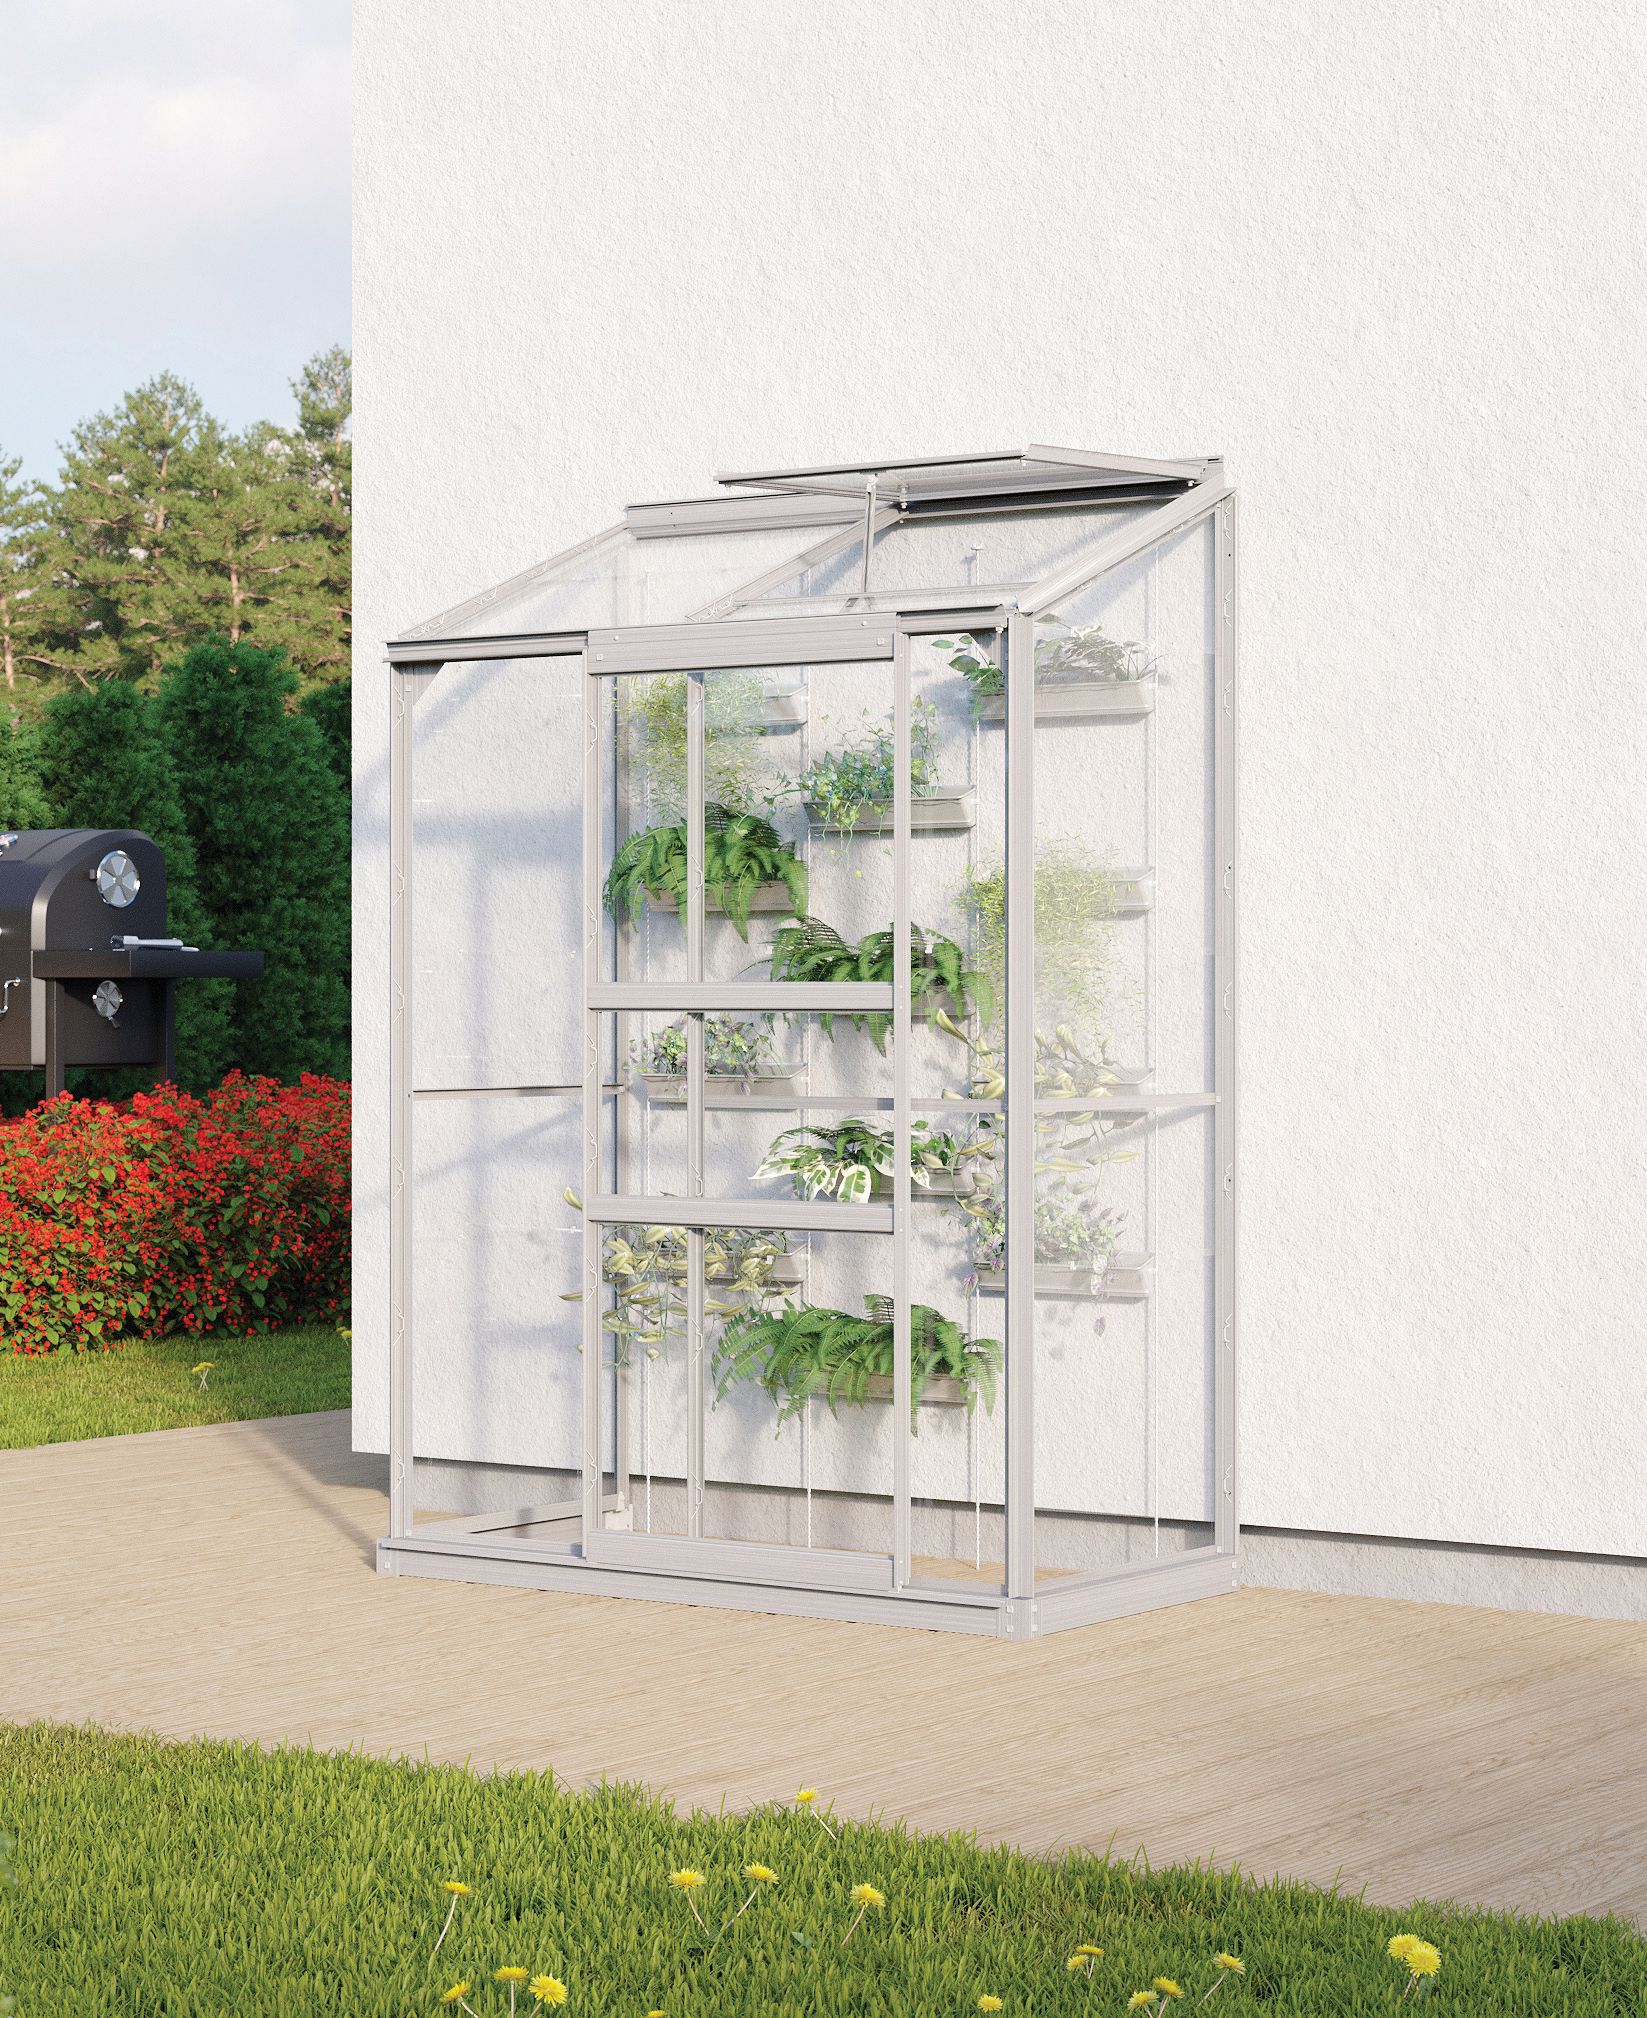 Image of Vitavia Ida 2 x 4ft Toughened Glass Greenhouse with Steel Base